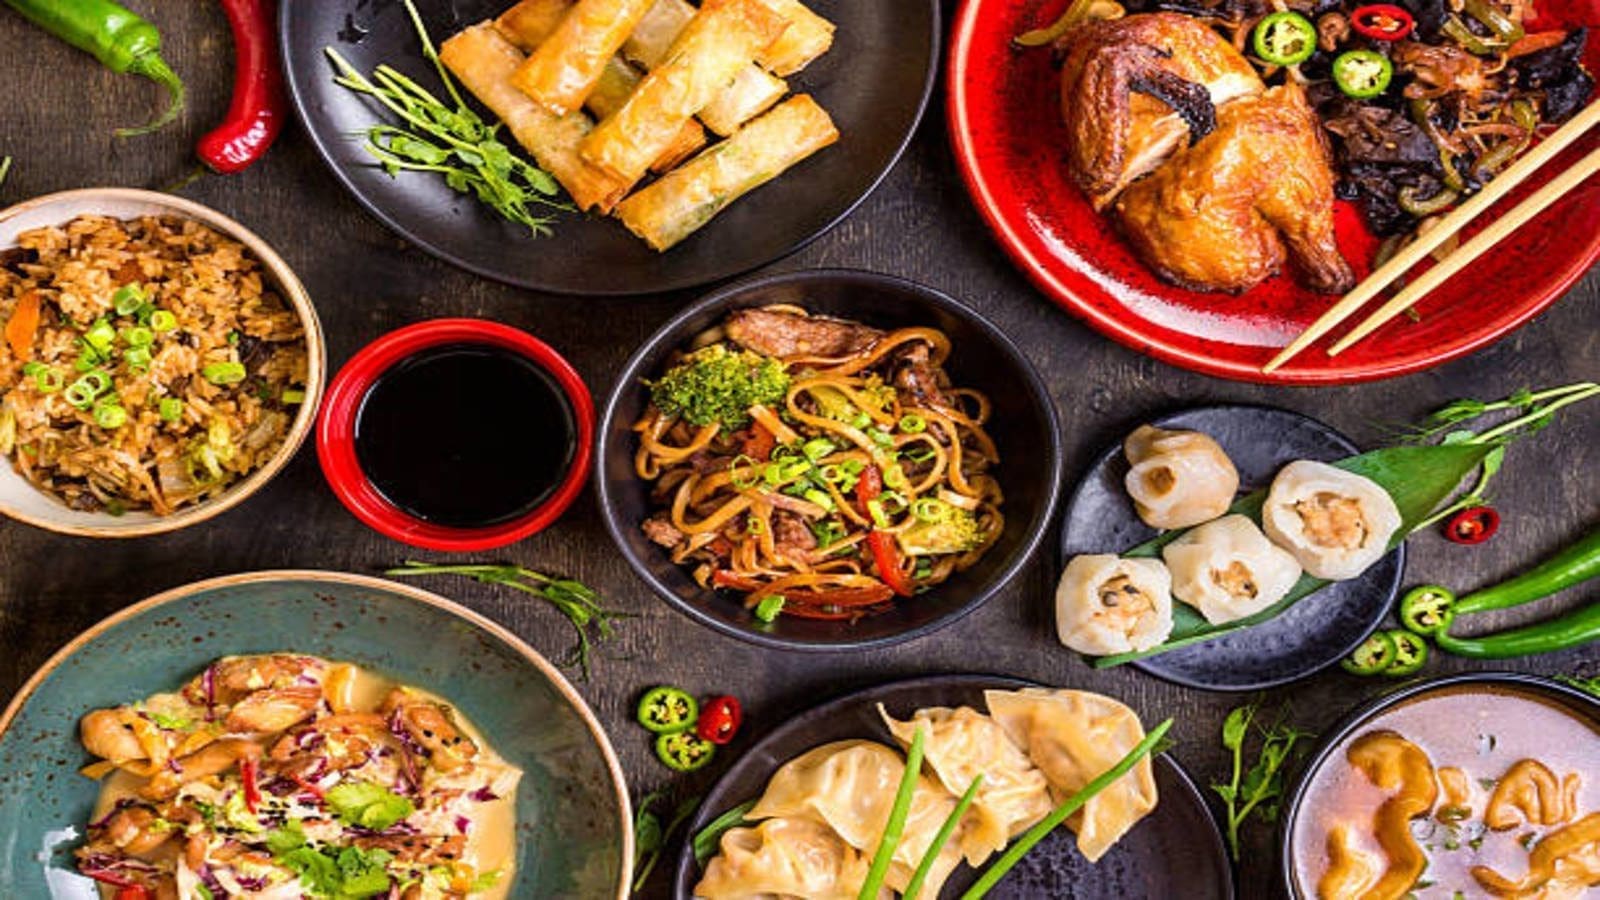 China’s inspection commission calls for stringent restaurant regulations